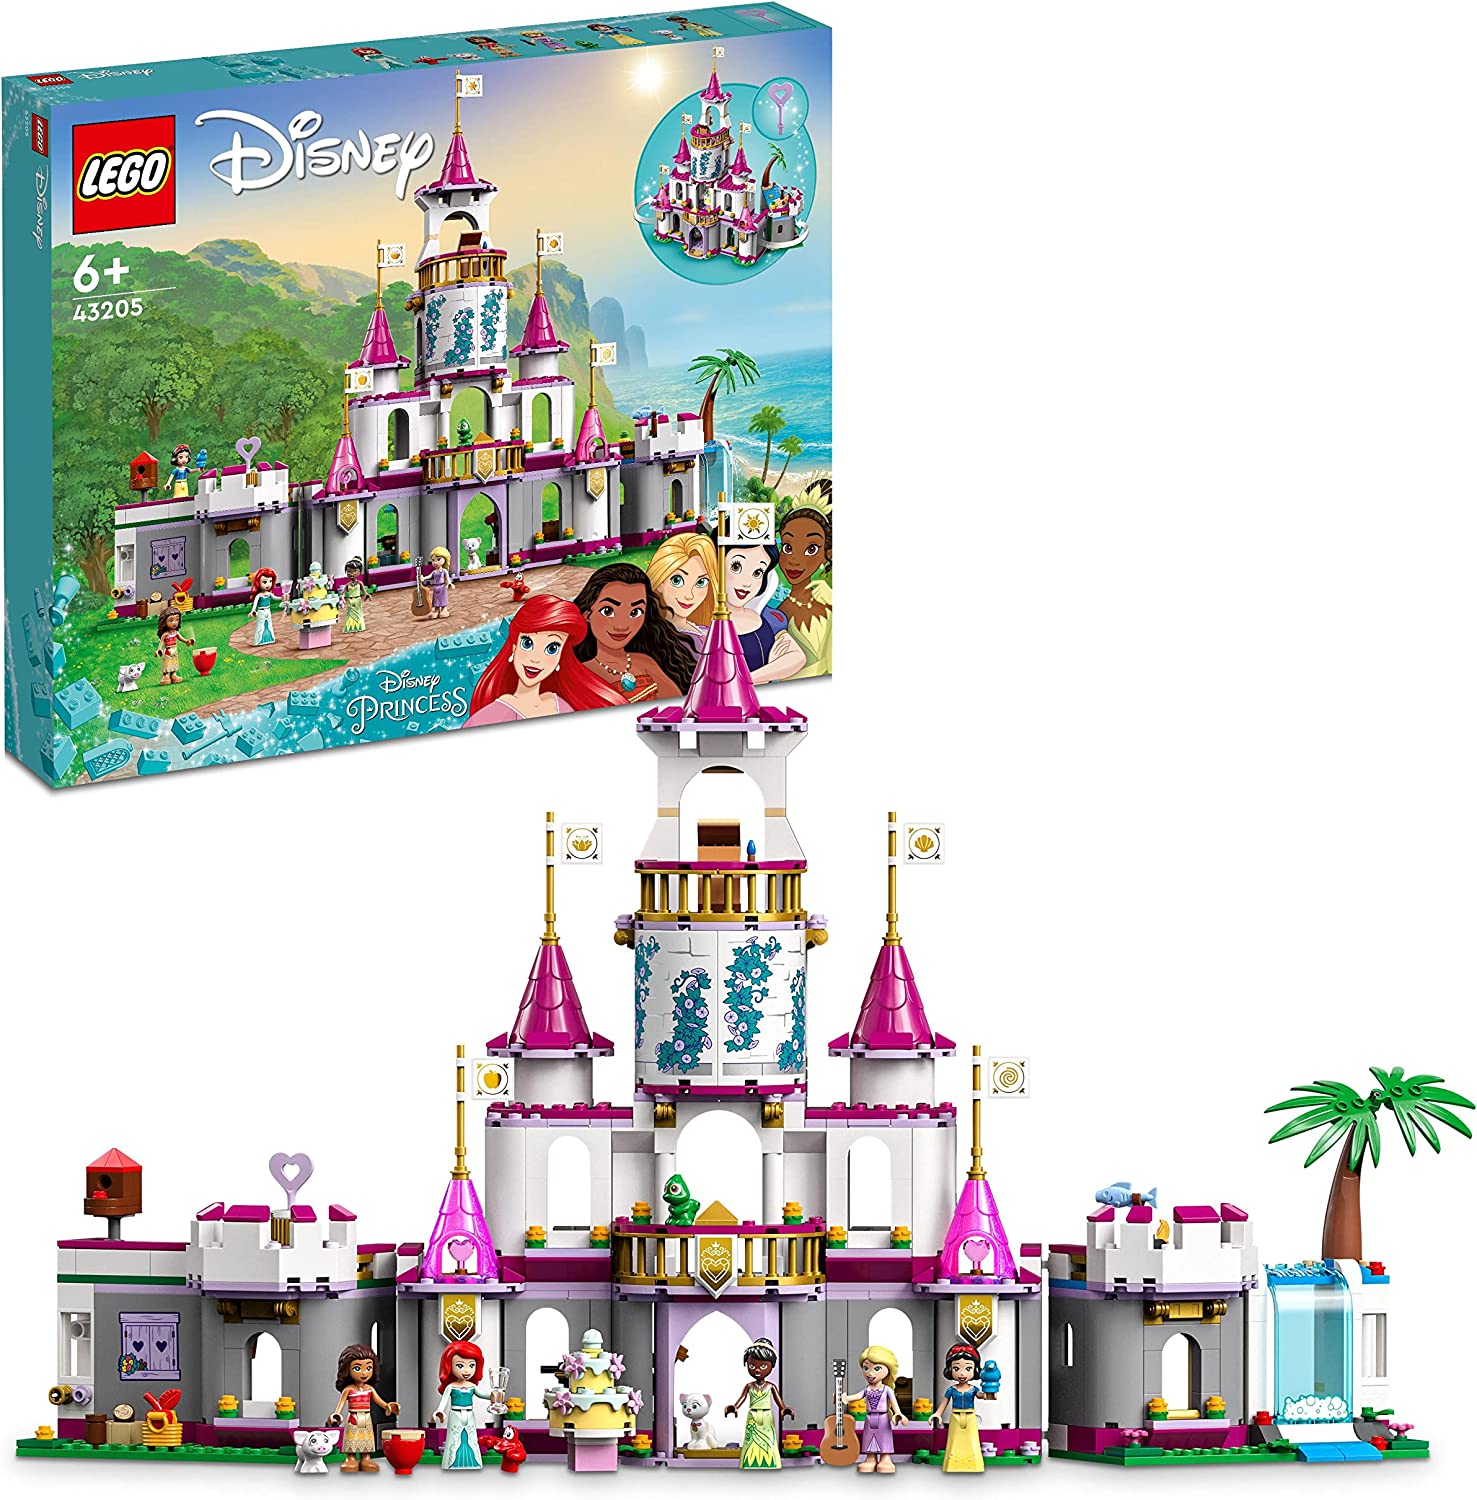 LEGO 43205 Disney Princess Ultimate Adventure Castle, Princess Castle Toy, Buildable Castle with Mini Dolls such as Ariel, Vaiana, Tiana